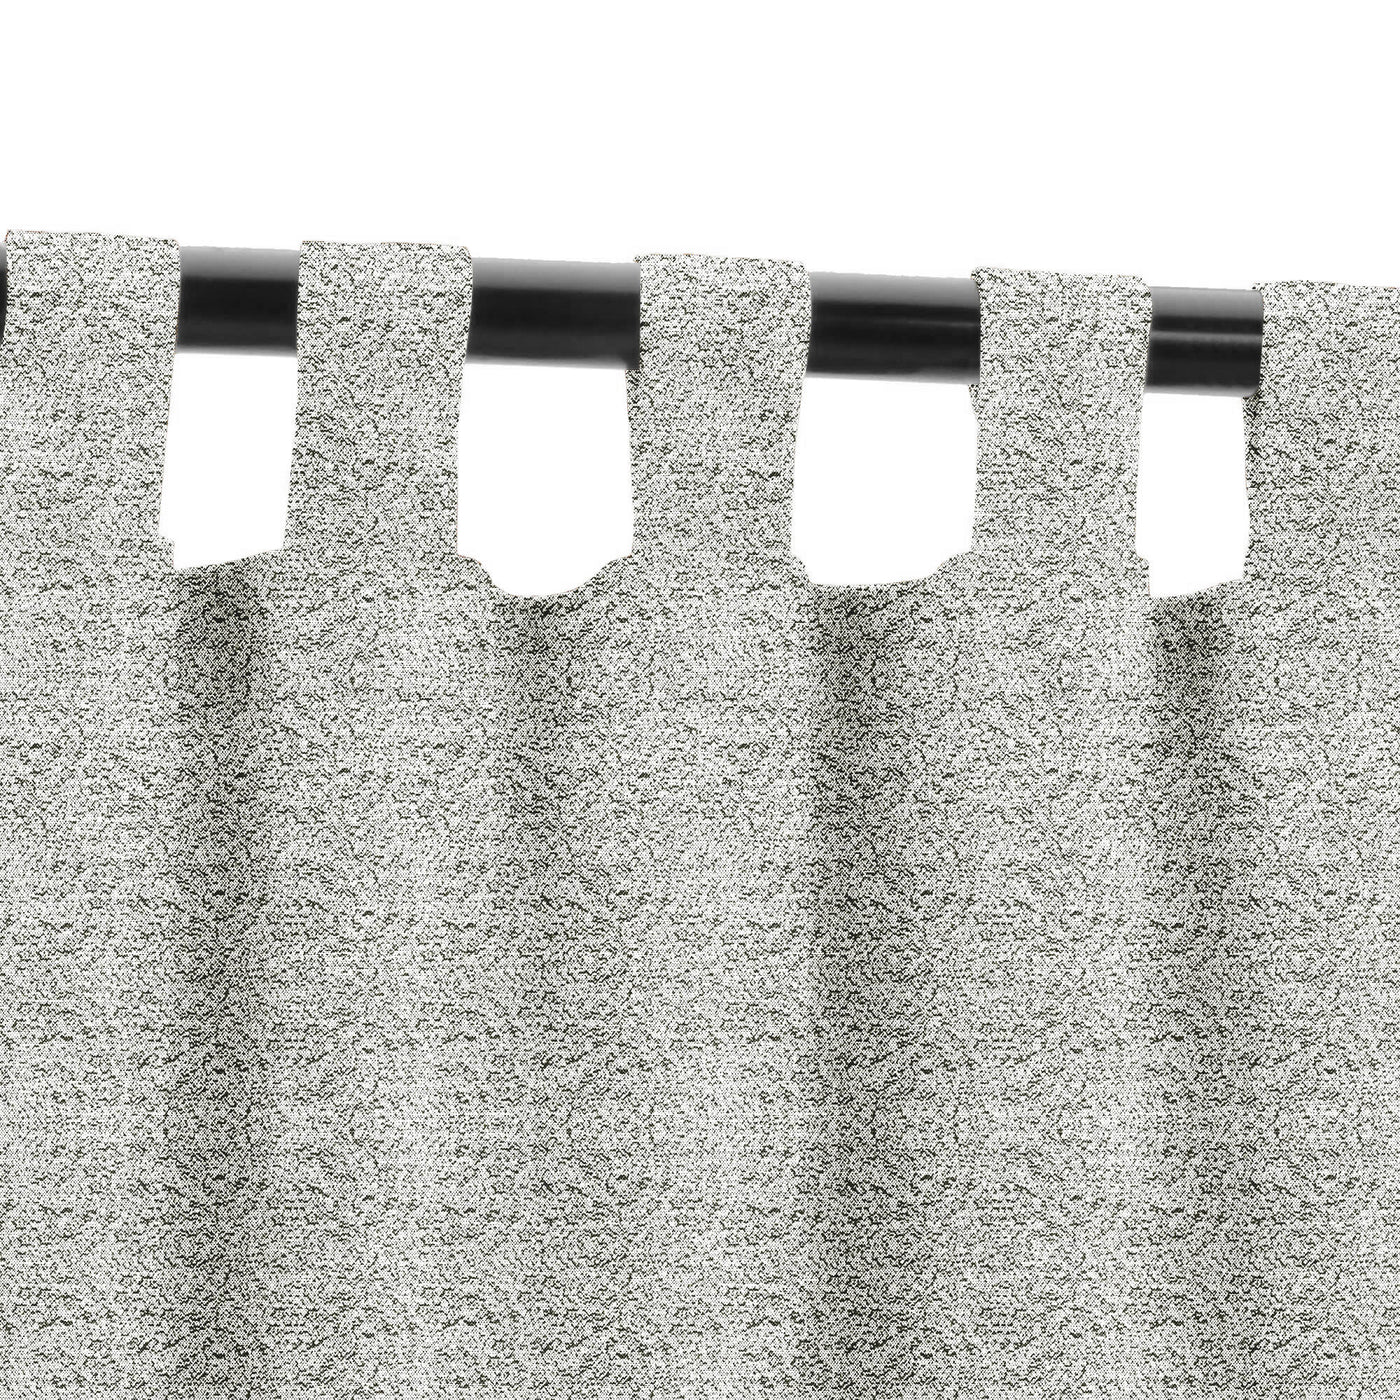 PENGI Outdoor Curtains Waterproof - Desert Black and White